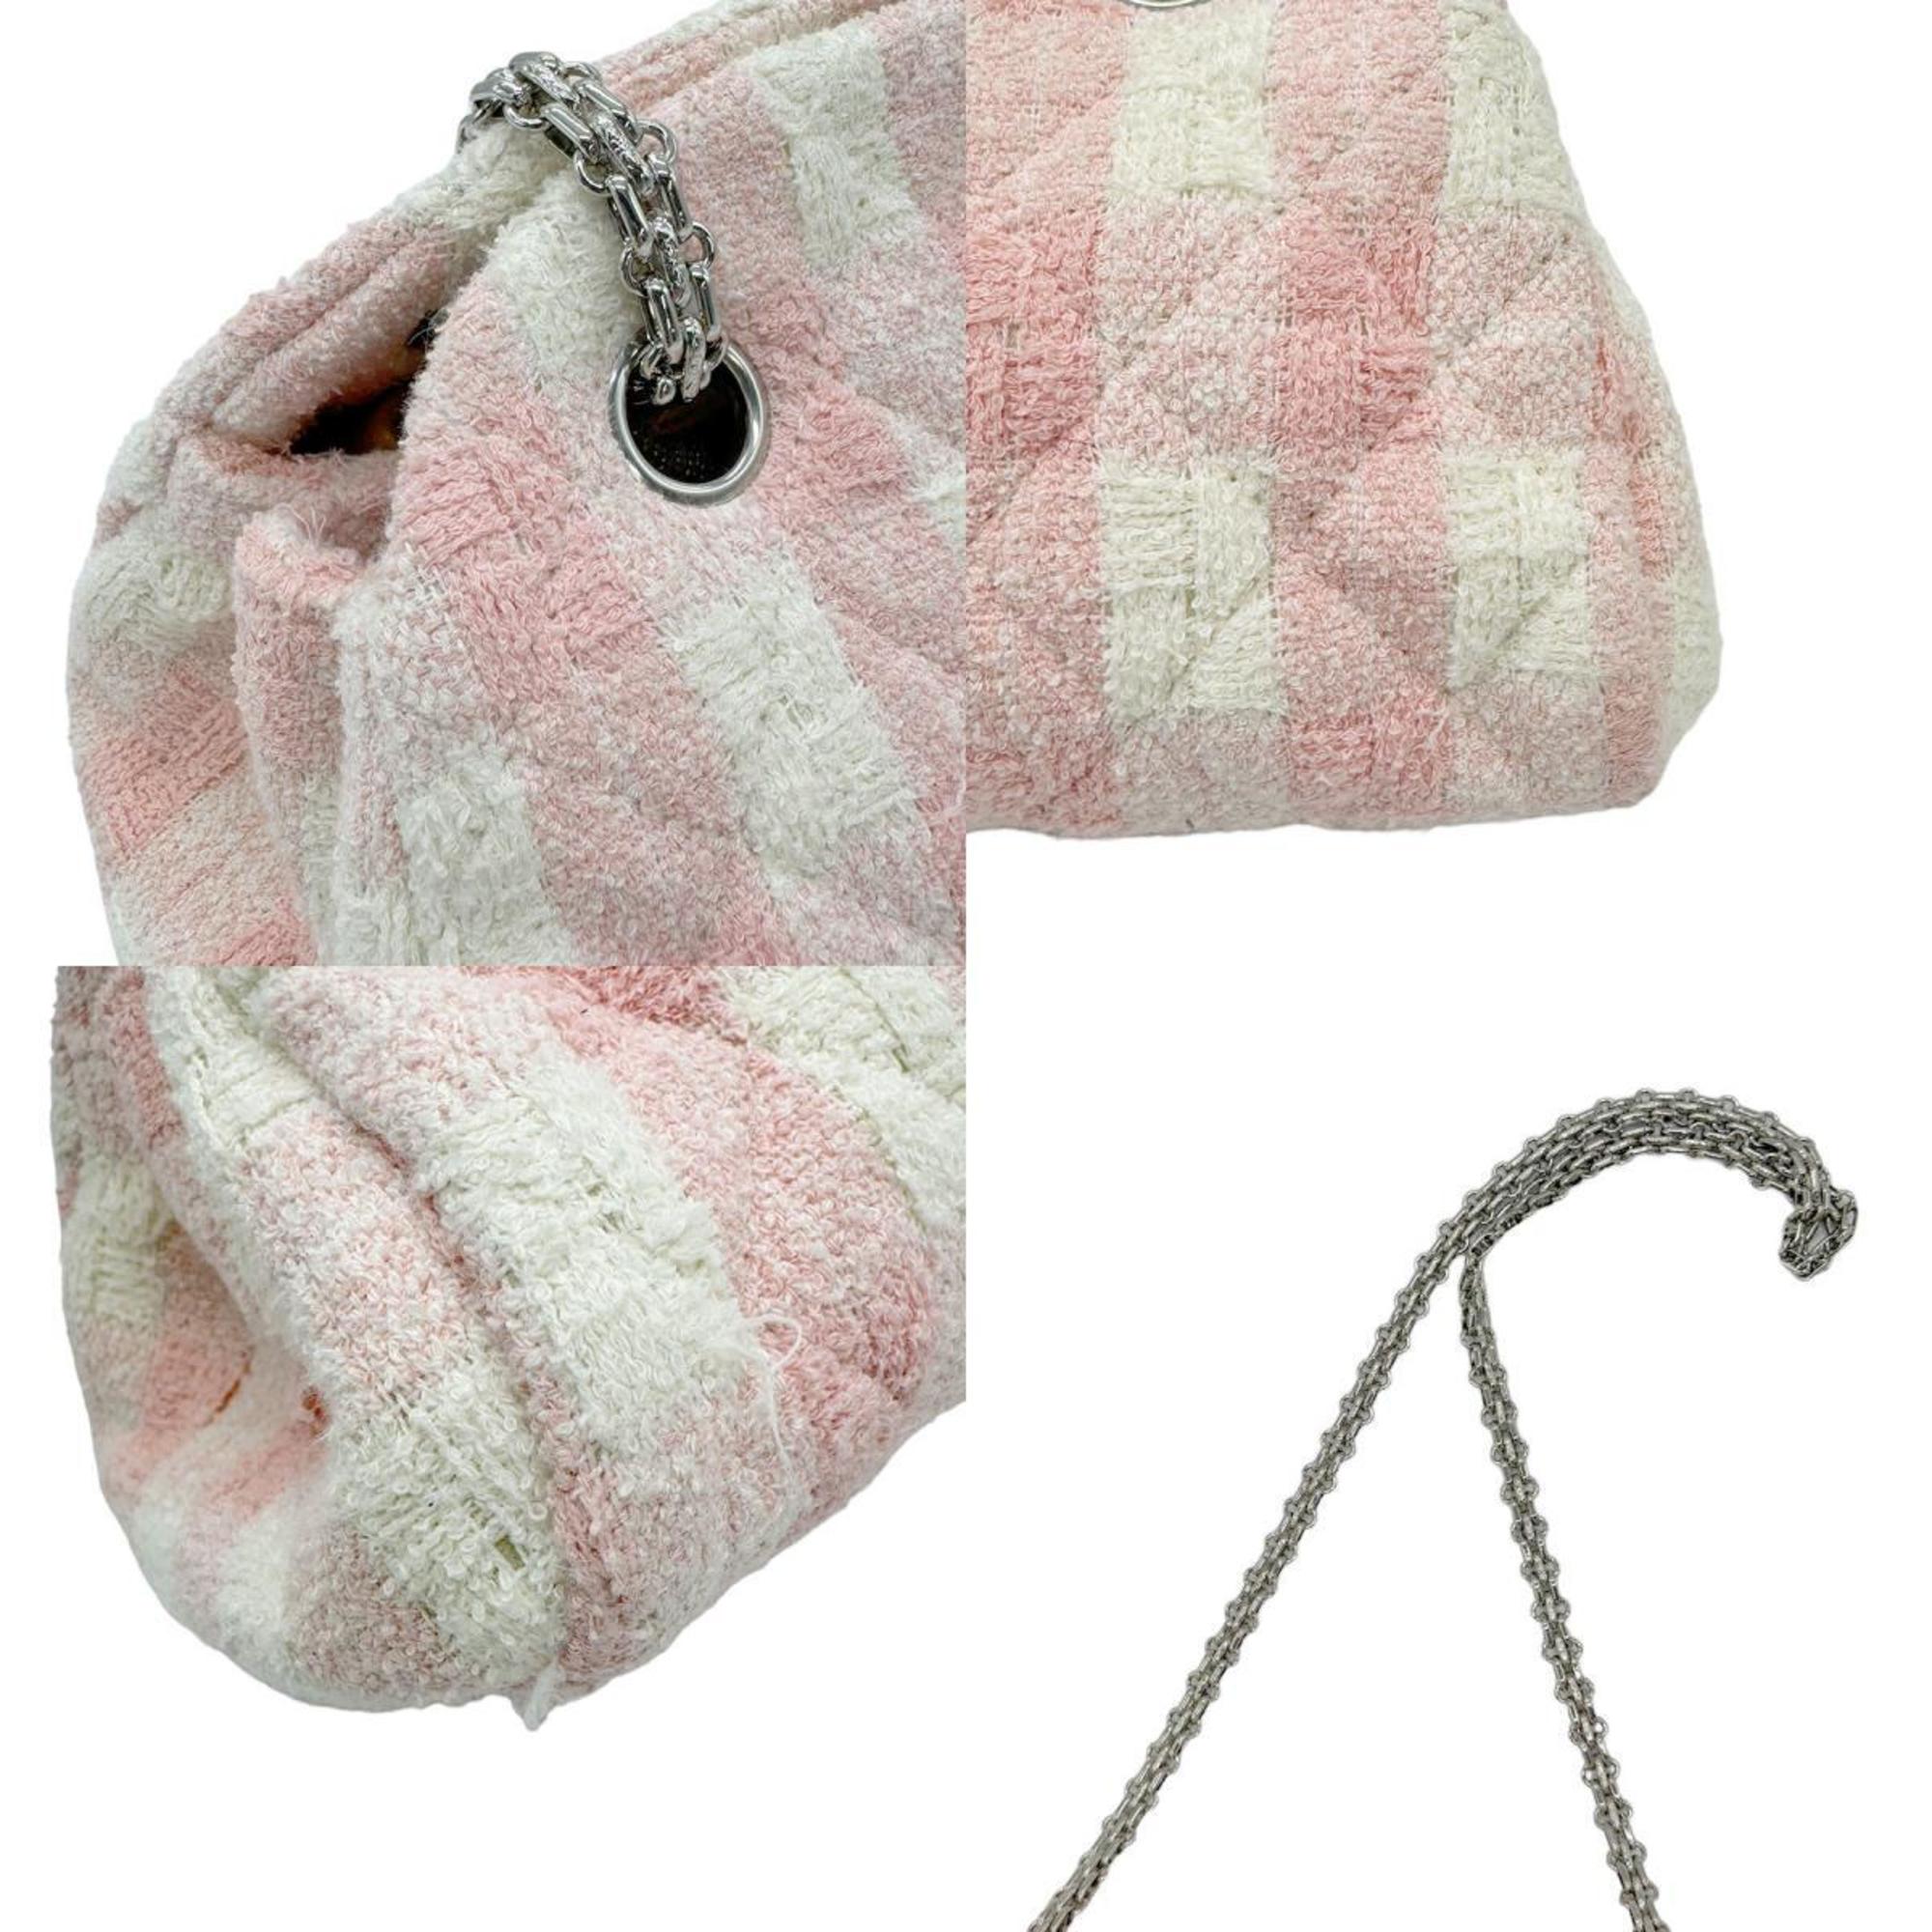 CHANEL Shoulder Bag Handbag Pile Pink x White Women's z0569